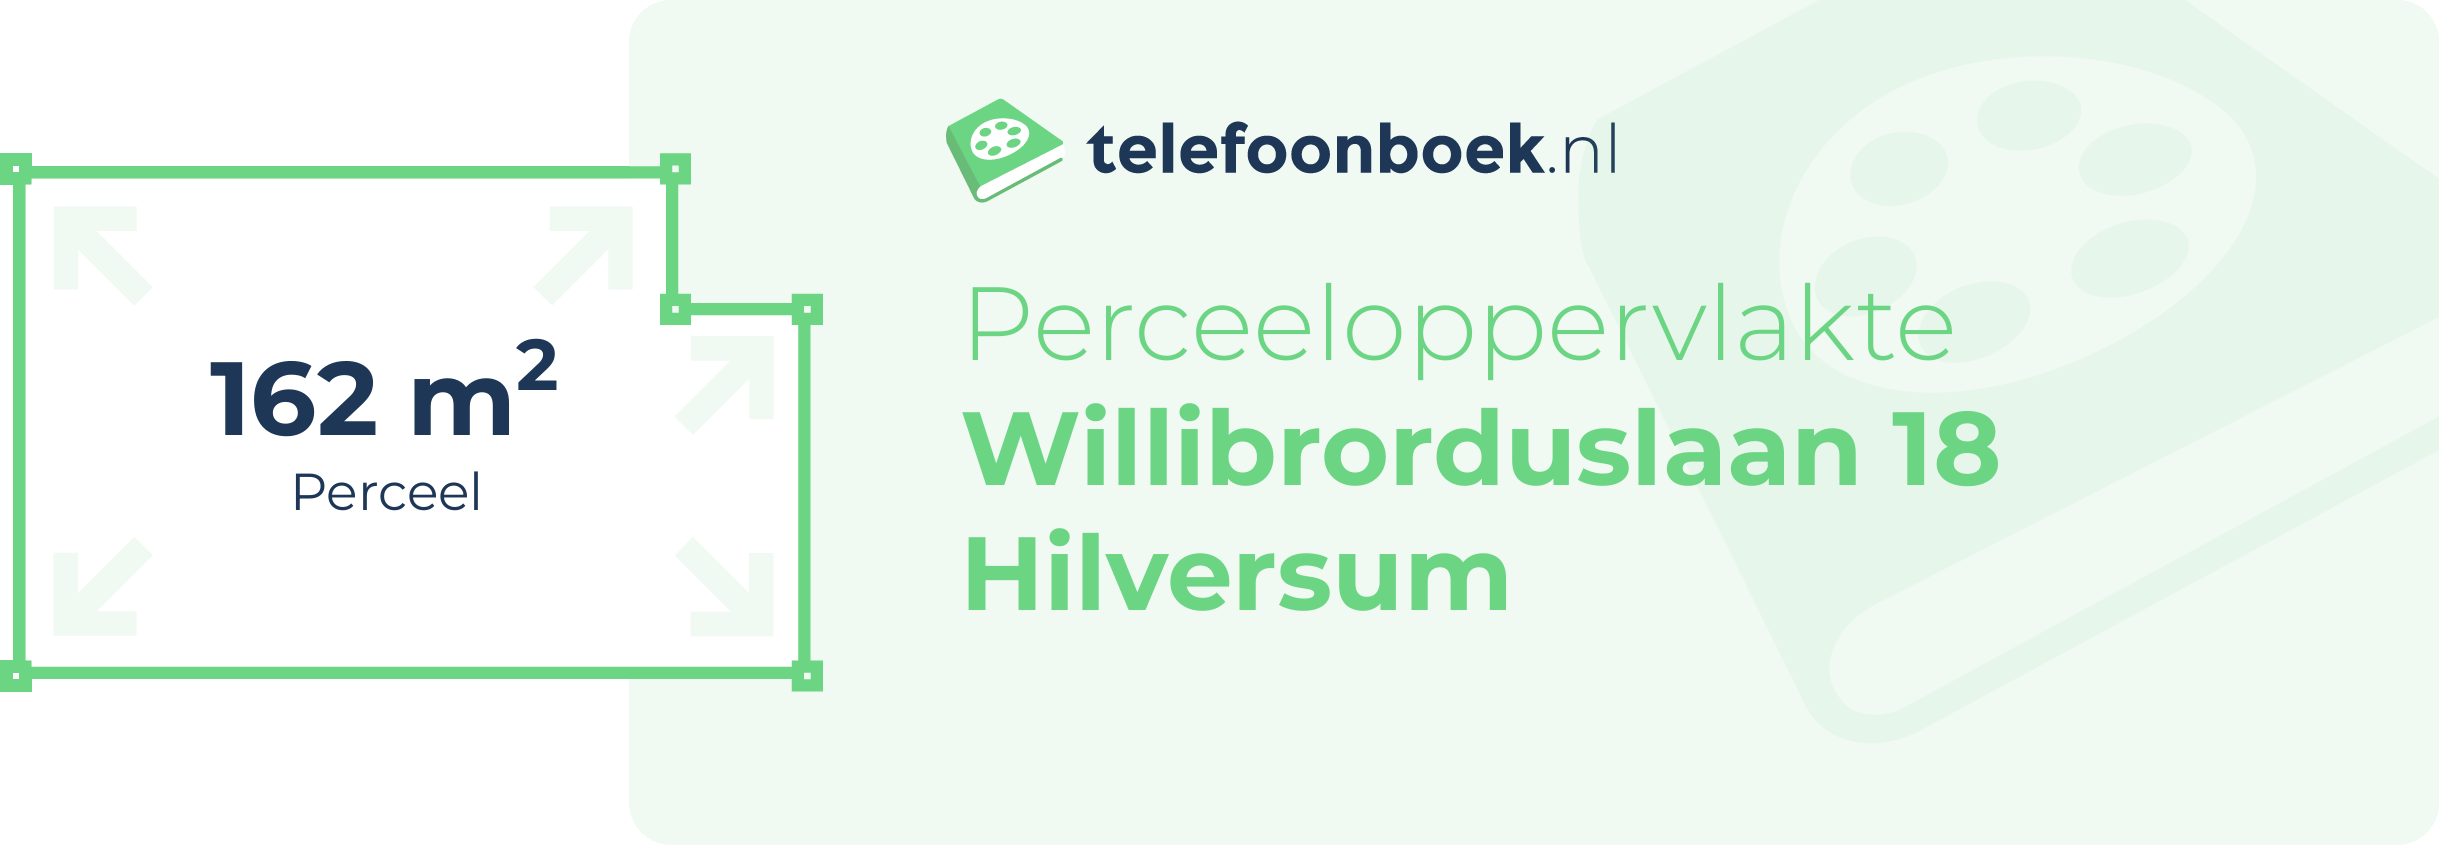 Perceeloppervlakte Willibrorduslaan 18 Hilversum